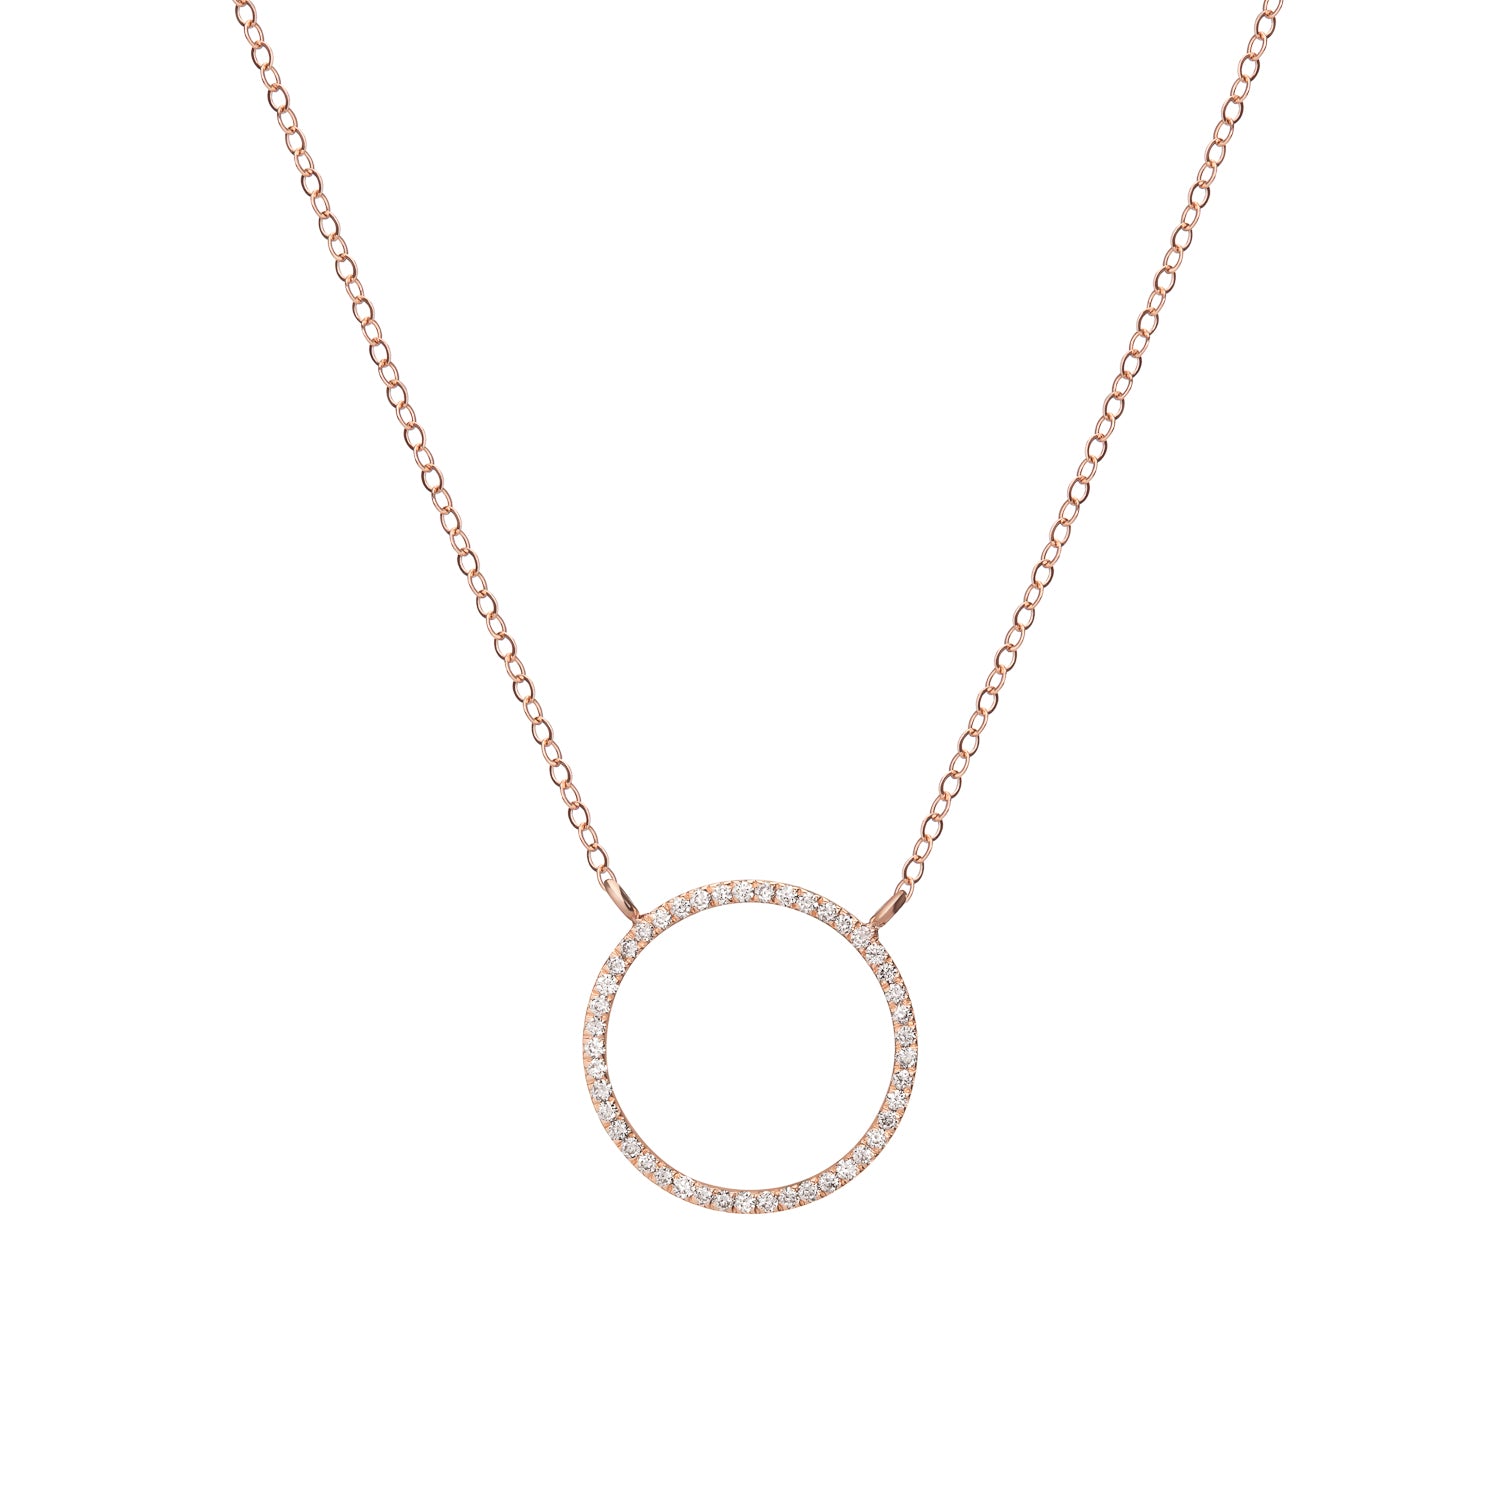 Shahla Karimi Jewelry Landmark Collection Central Park Hoop Necklace 14K Rose Gold